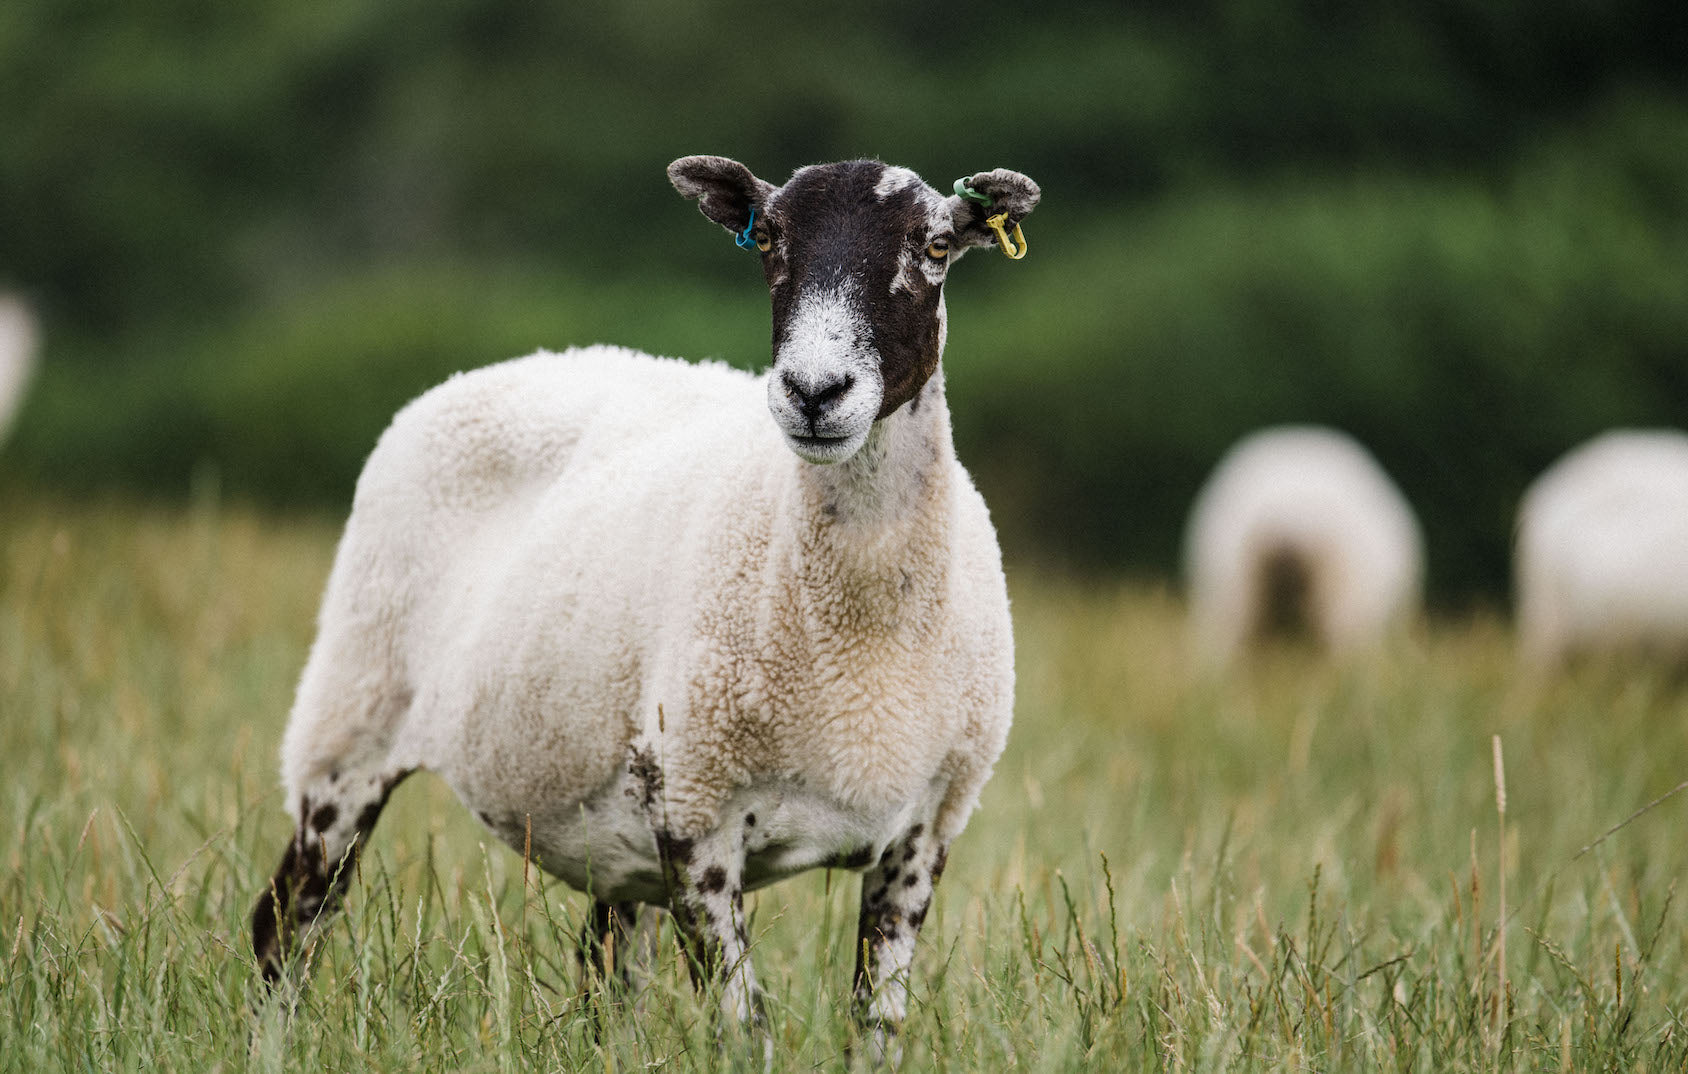 A cull yaw sheep in a field